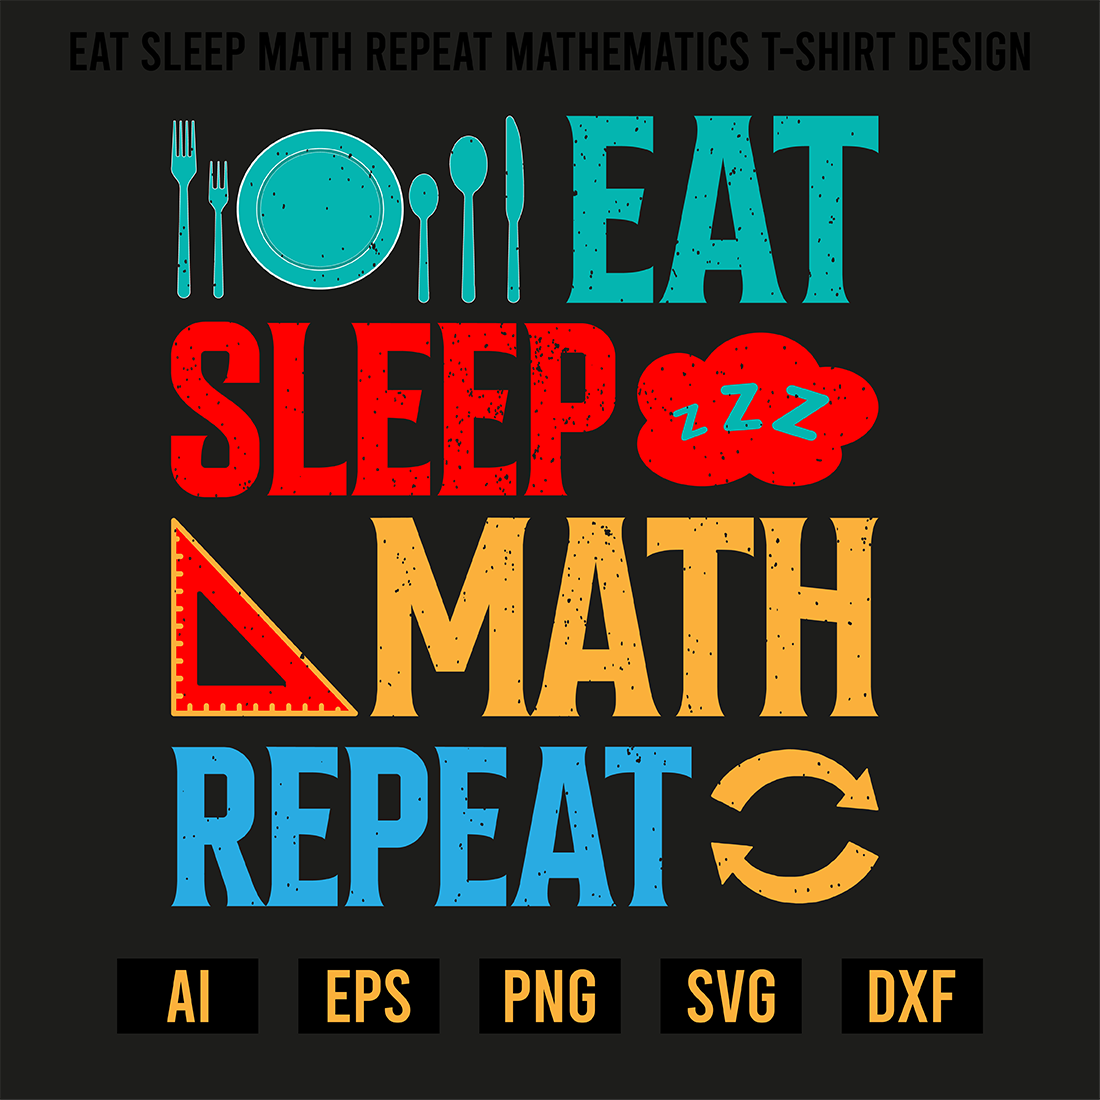 Eat Sleep Math Repeat Mathematics T-Shirt Design cover image.